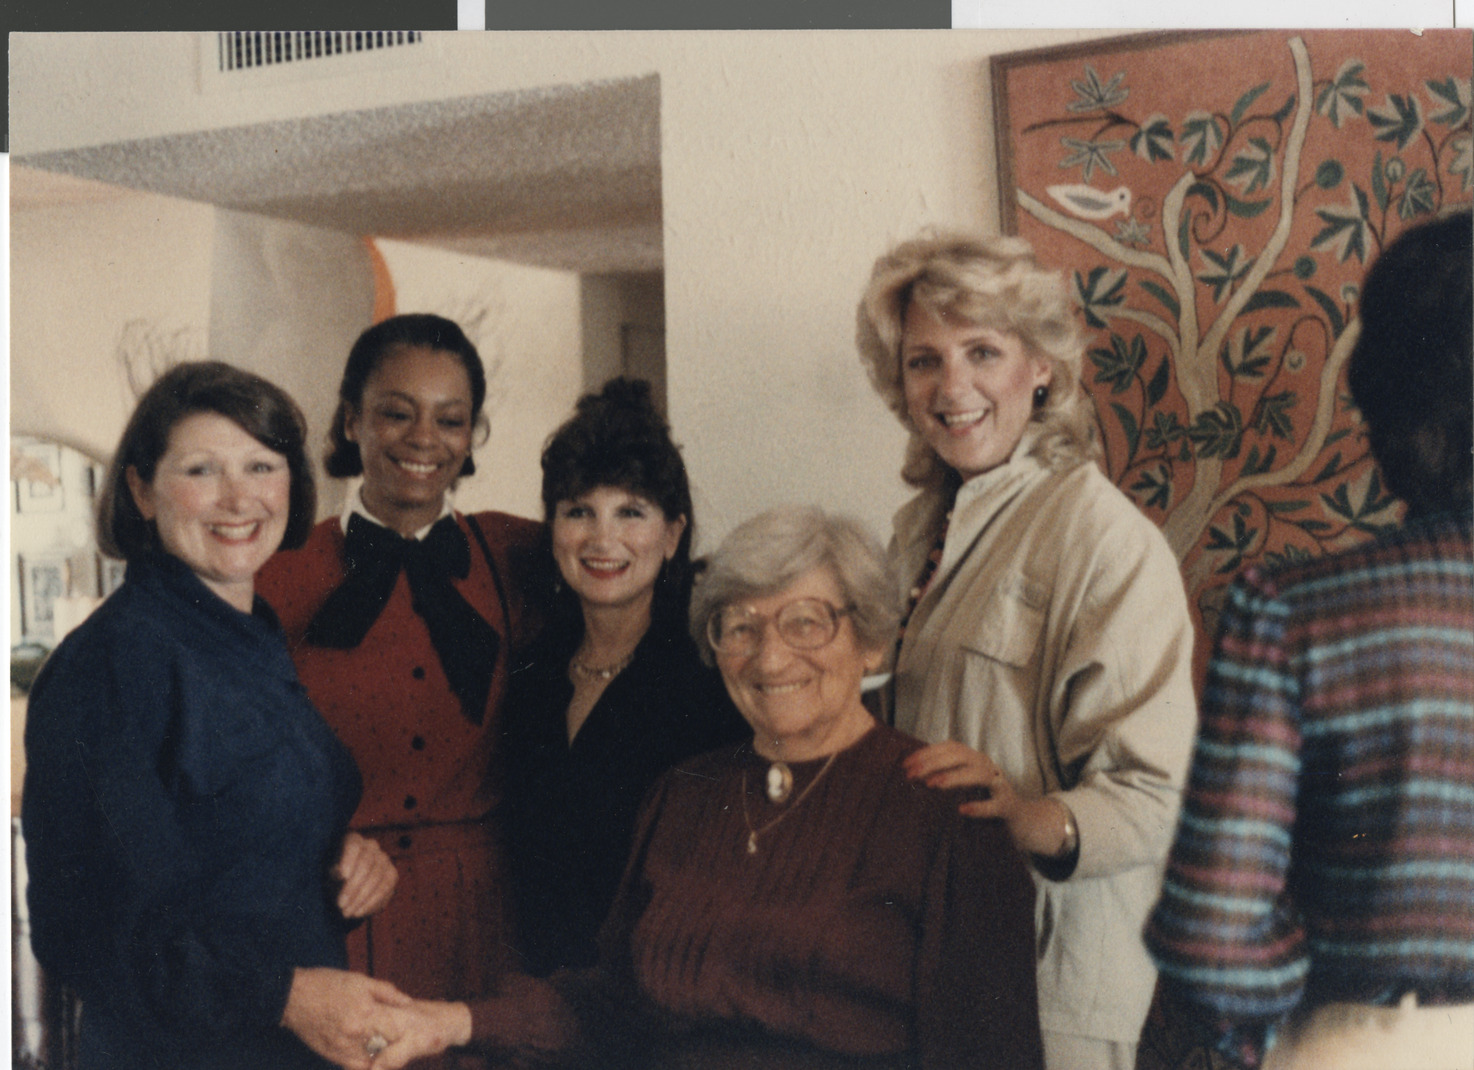 Photograph of Este, JJ Cowles, Jayne Marshall, Sarah Saltzman and Carolyn Goodman at Lynn Rosencrantz's 40th birthday party, date unknown